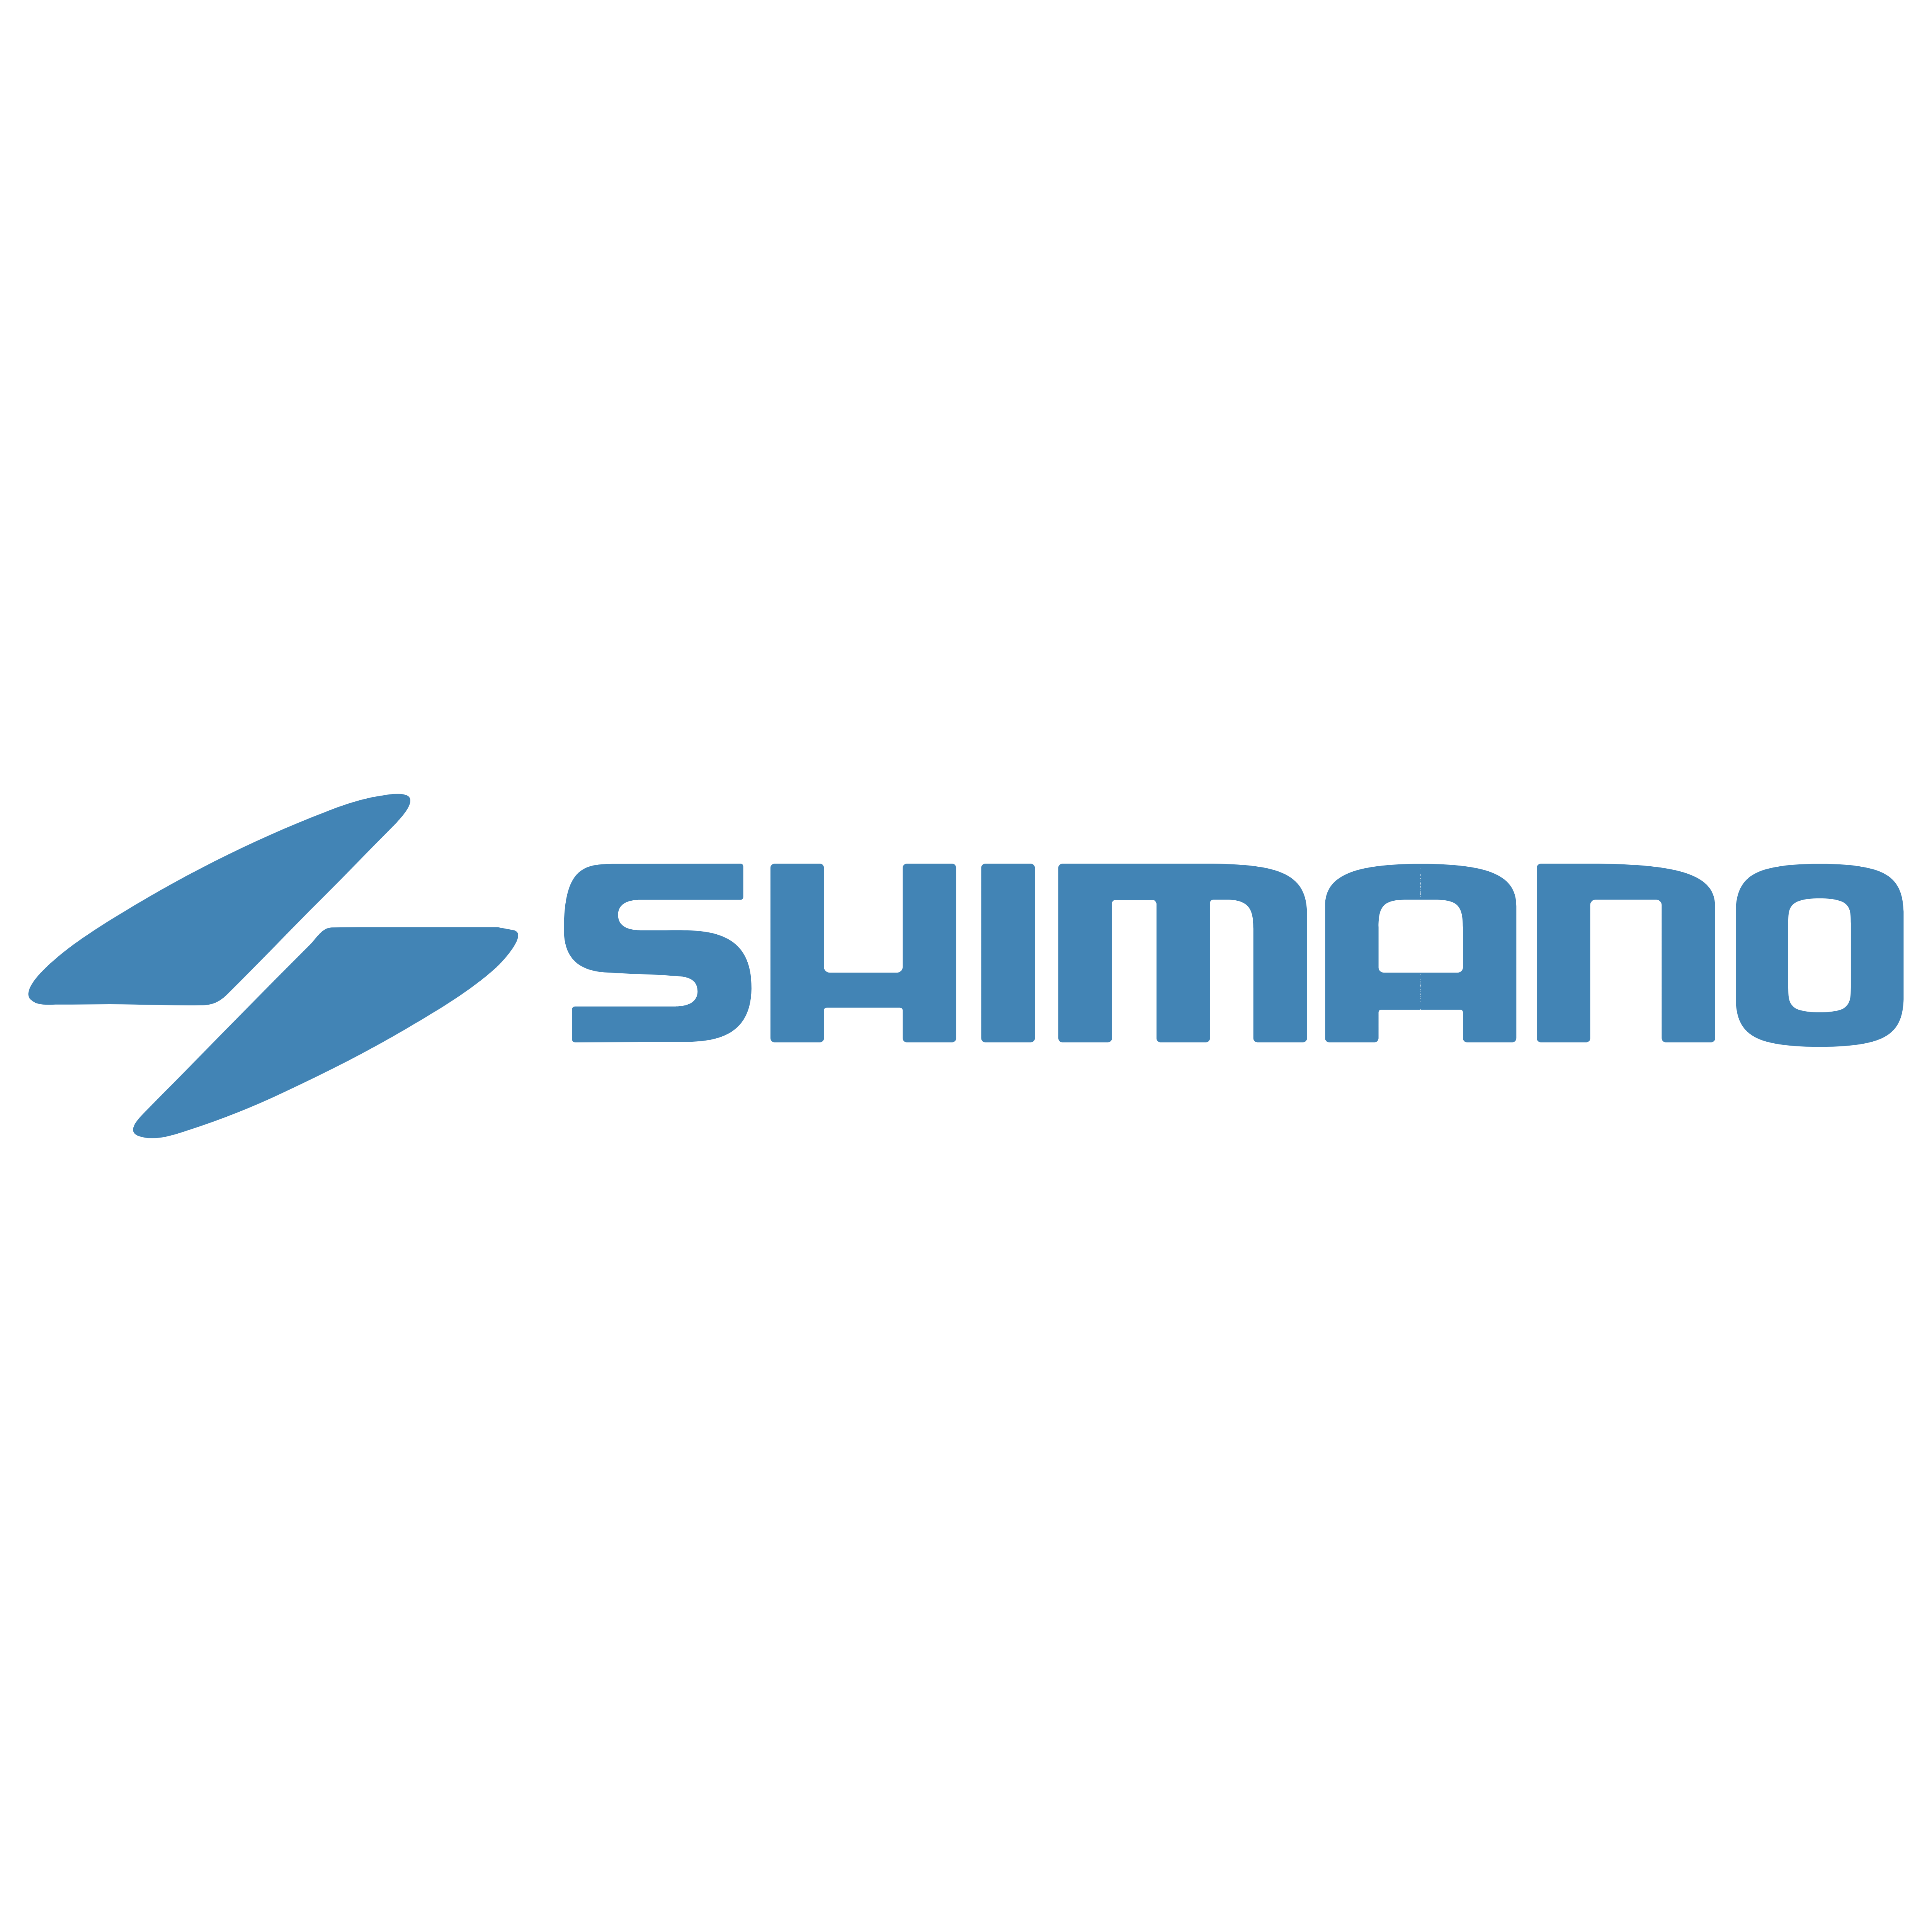 Shimano Logo - Shimano – Logos Download